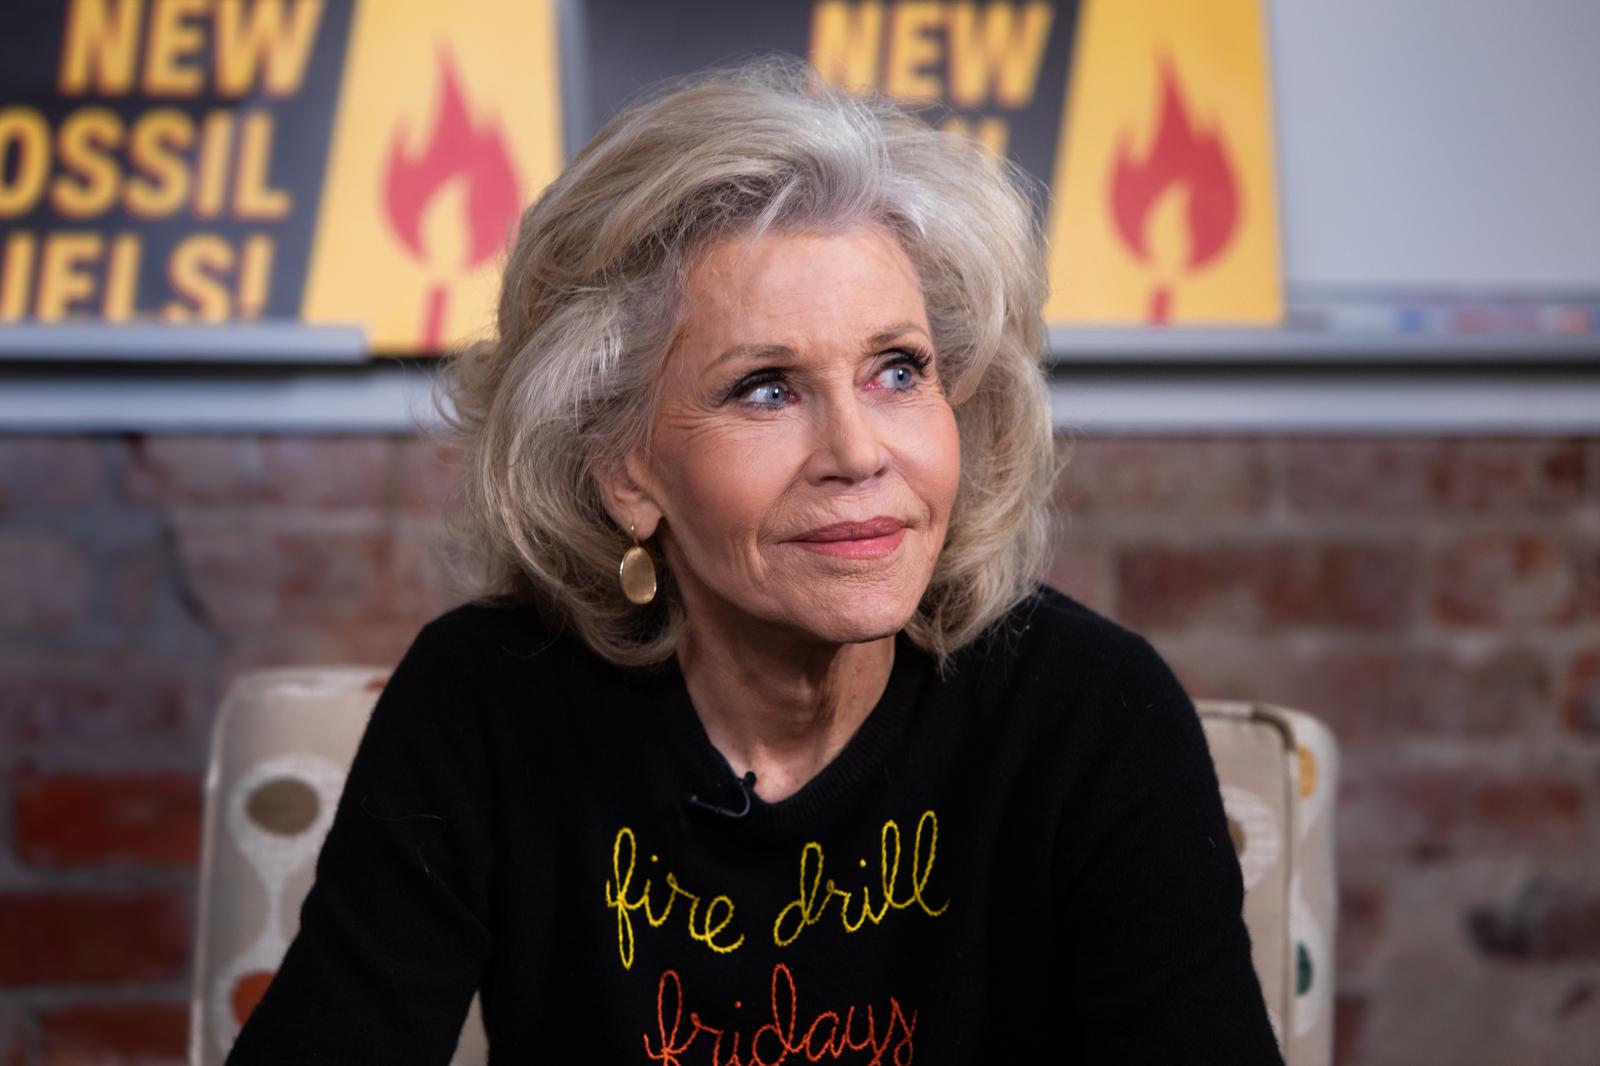 Image from Events - WASHINGTON, DC - JANUARY 2nd: Actress Jane Fonda while...